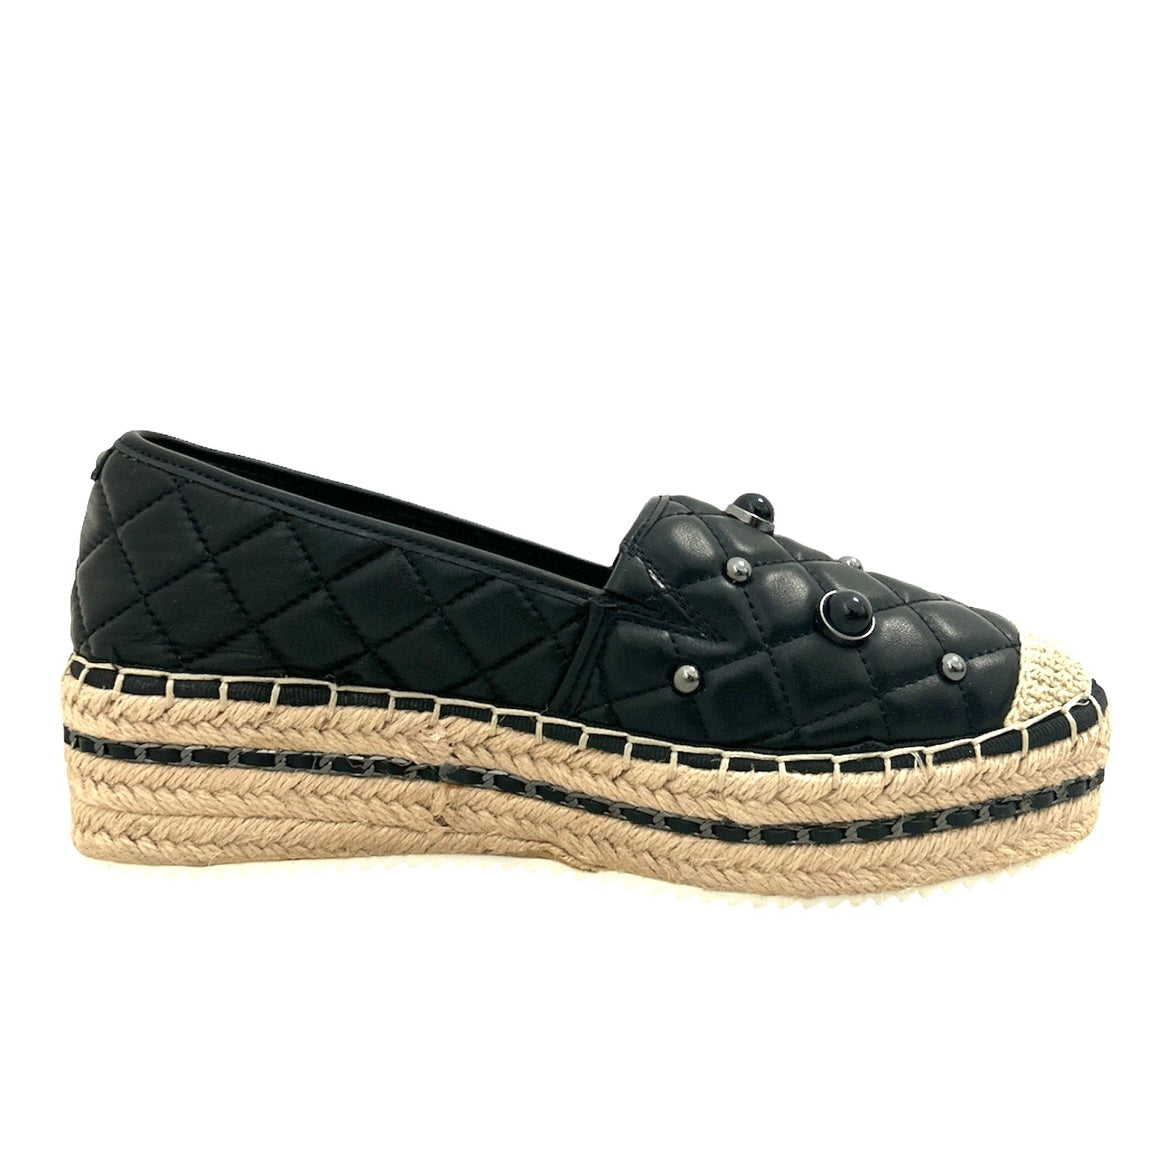 DIYA Platform Espadrille Flats Size 6.5 Slip On Women's Shoes